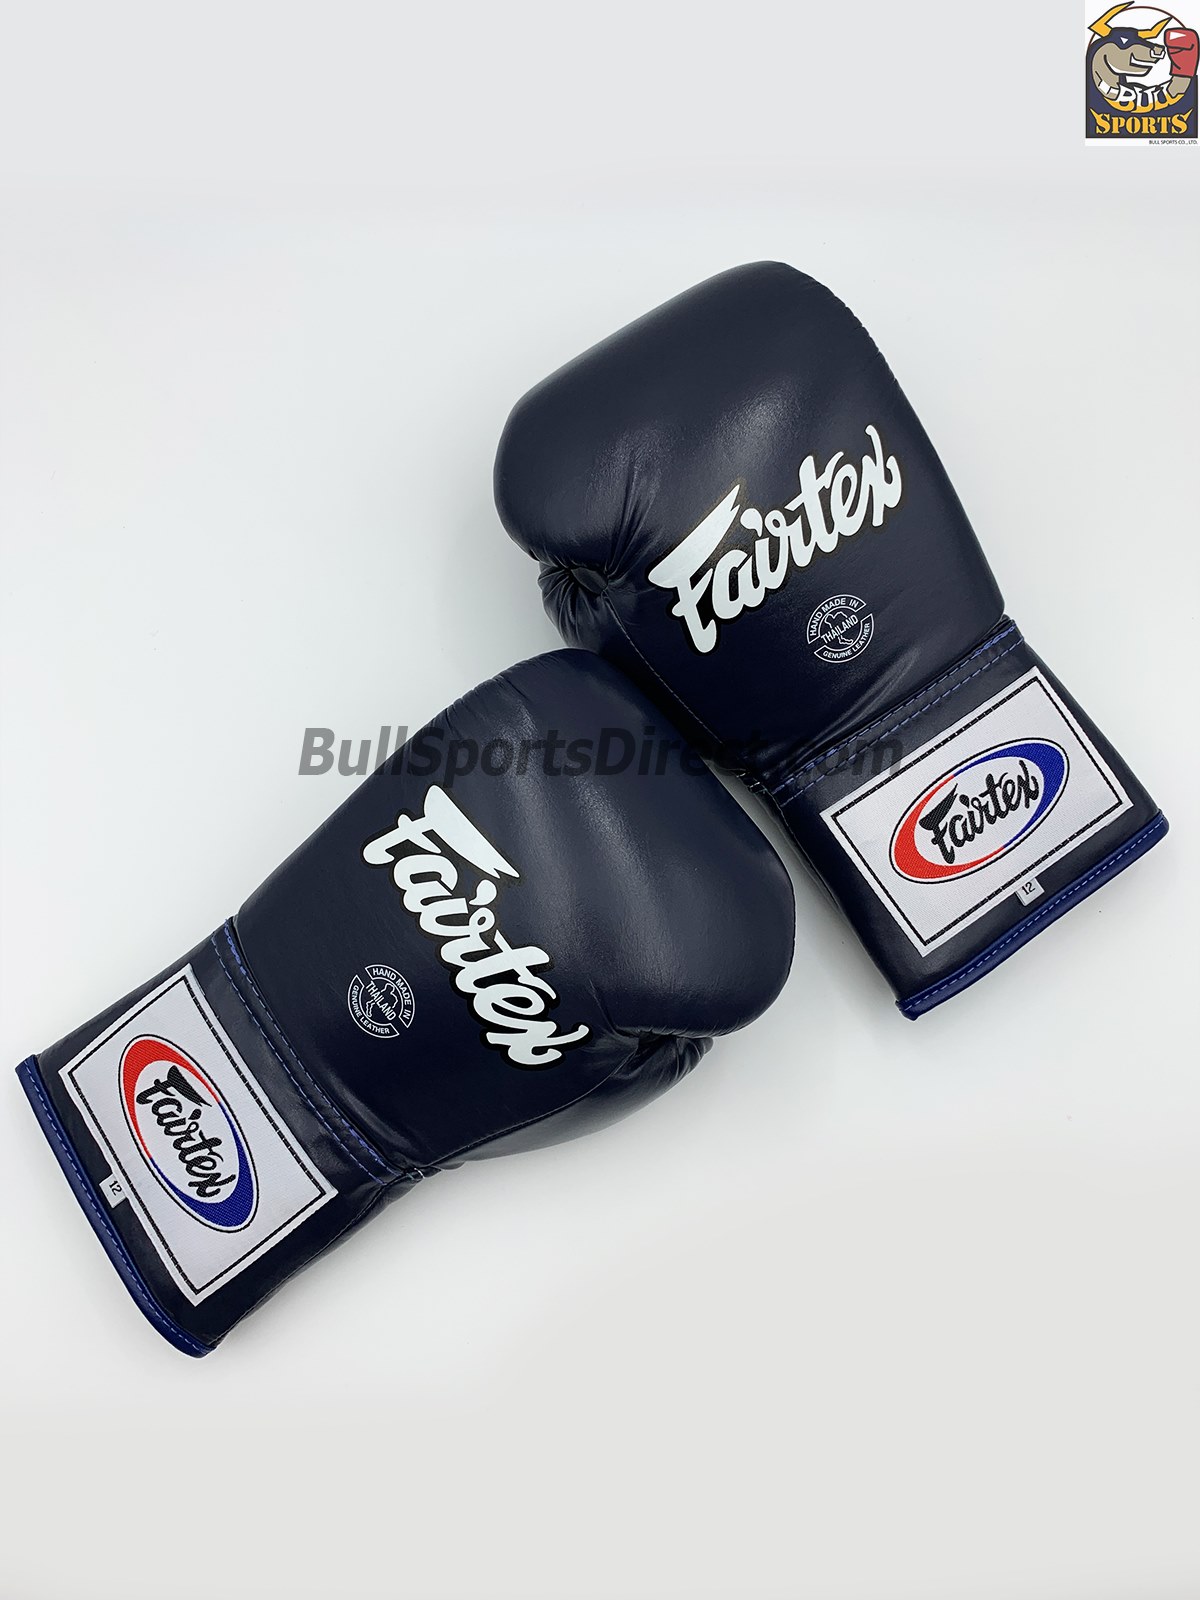 Fairtex BGL6 Fairtex Pro Fight Gloves Blue White Competition boxing gloves 